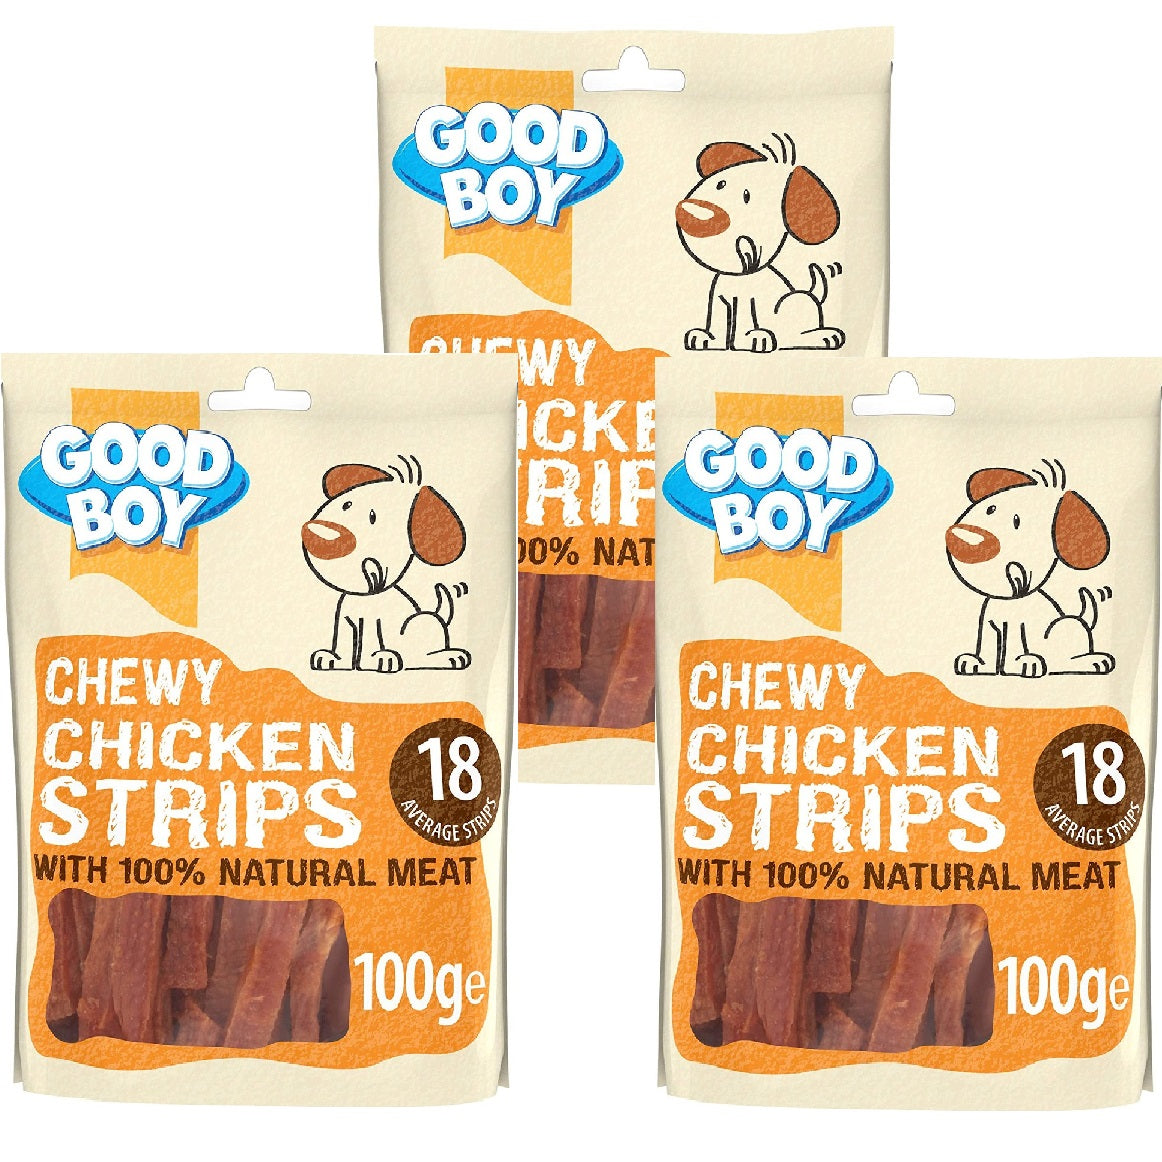 Good Boy - Chewy Chicken Strips (100g)